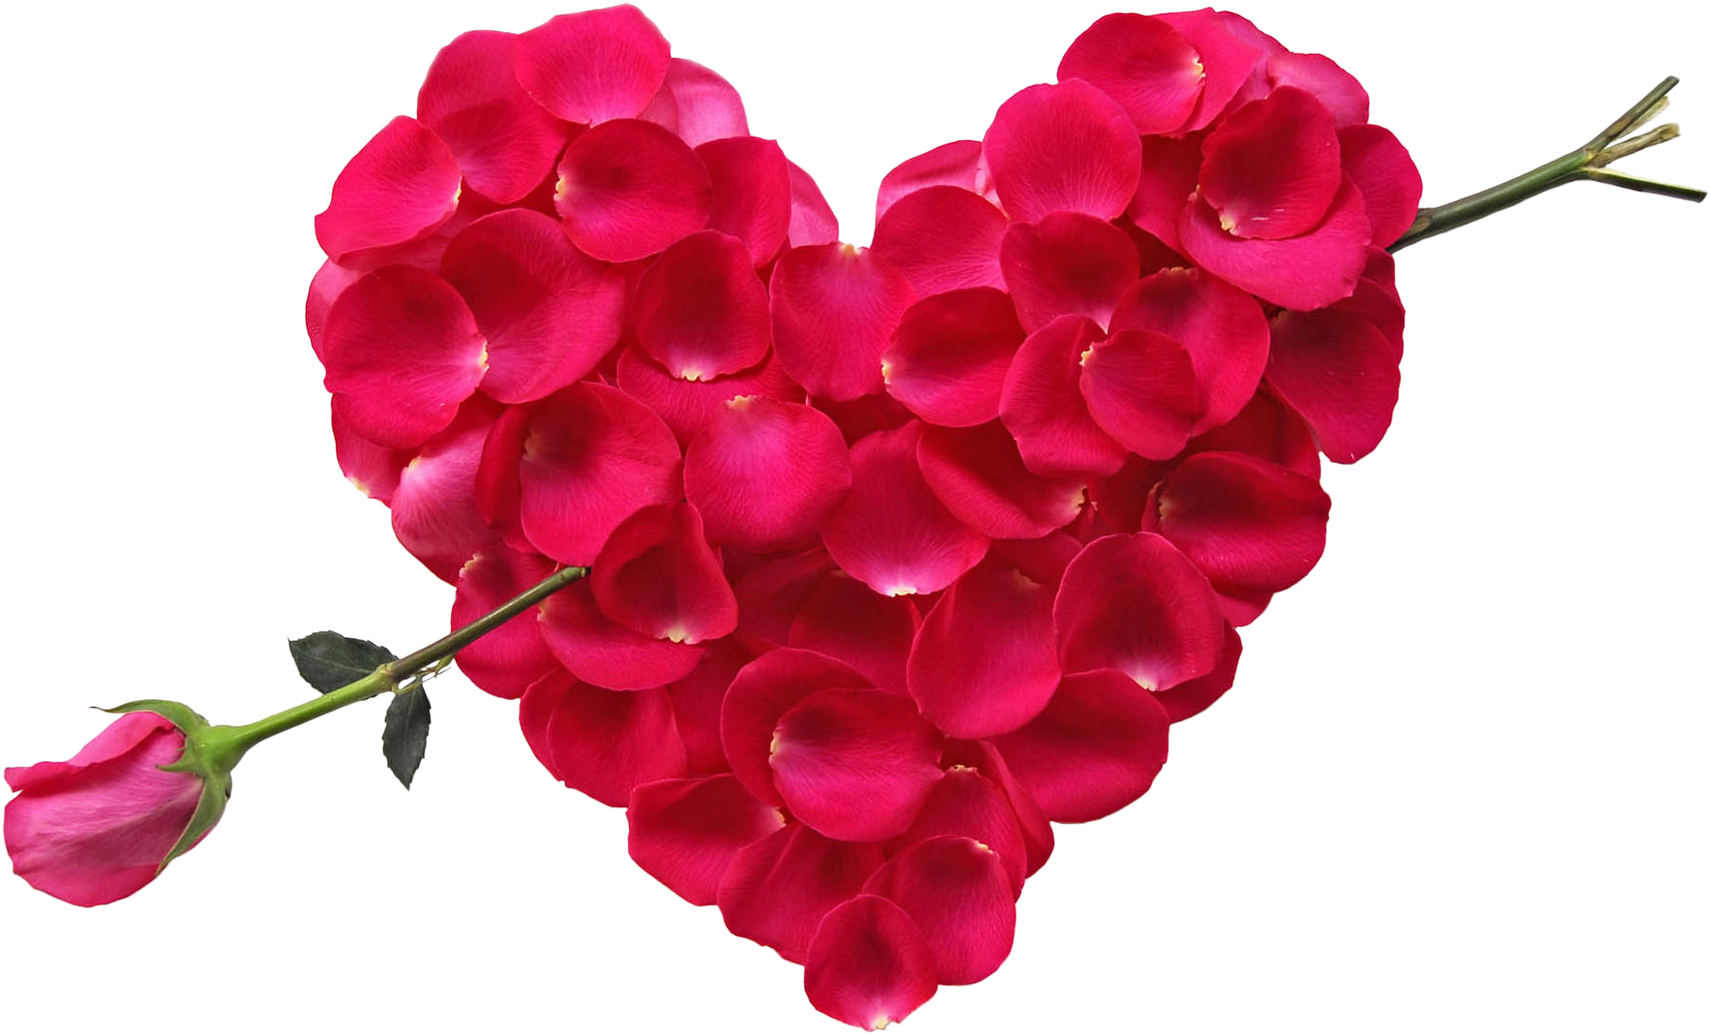 Flower Bouquet Rose Heart Petal - Flower Bokeh Images Hd (1920x1080)